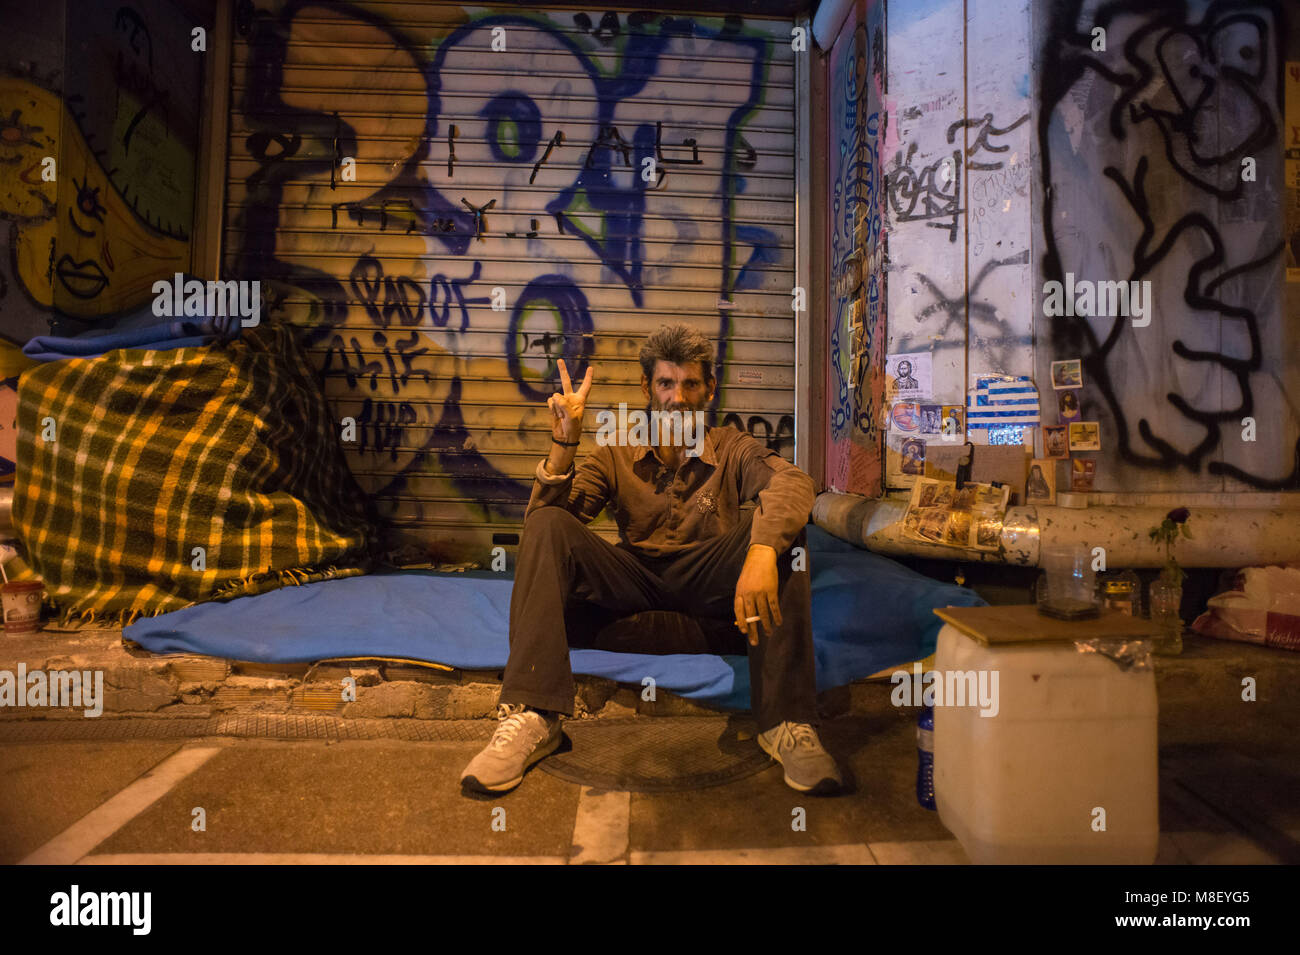 Athens. Chris, homeless sleeping rough near Syntagma square. Greece. Stock Photo